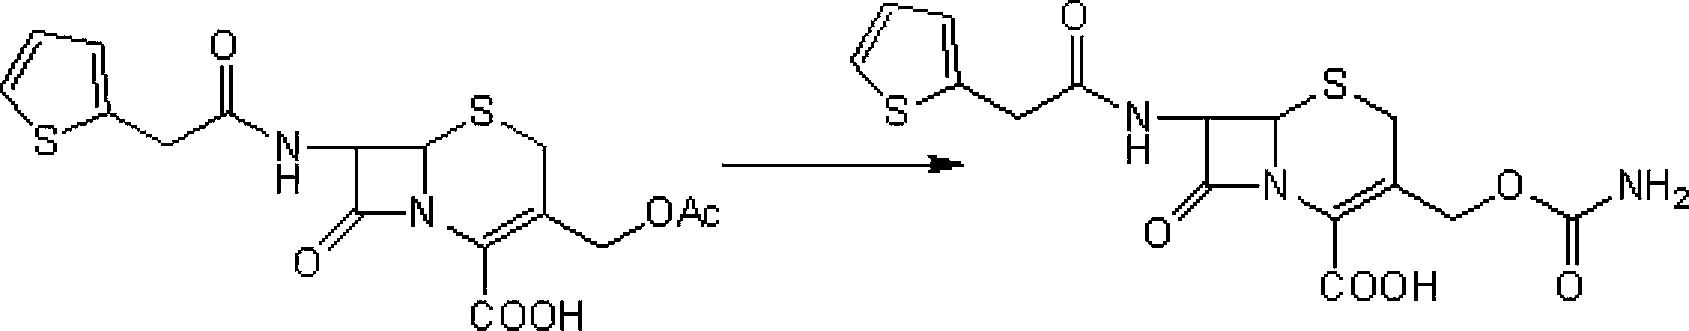 Method for producing cefoxitin acid